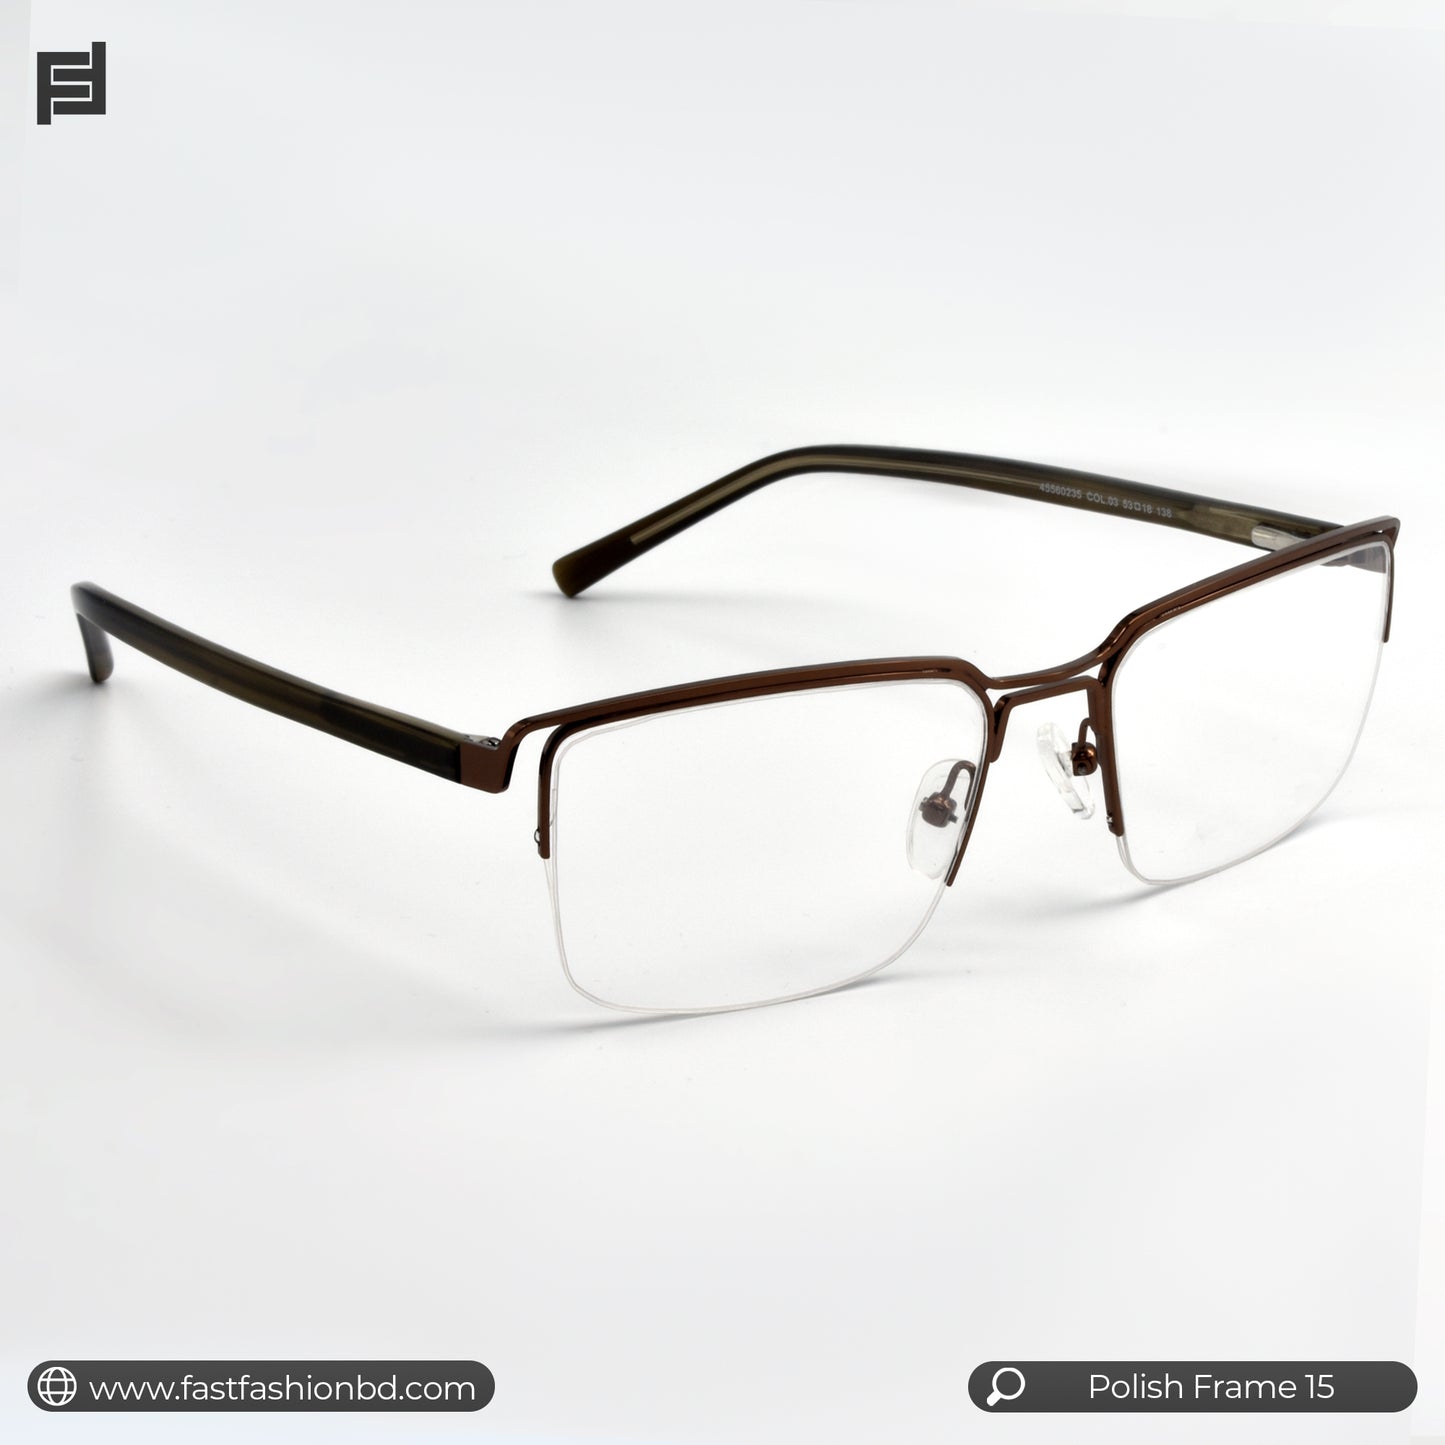 Trendy Stylish Optic Frame | Polish Frame 15 | Premium Quality